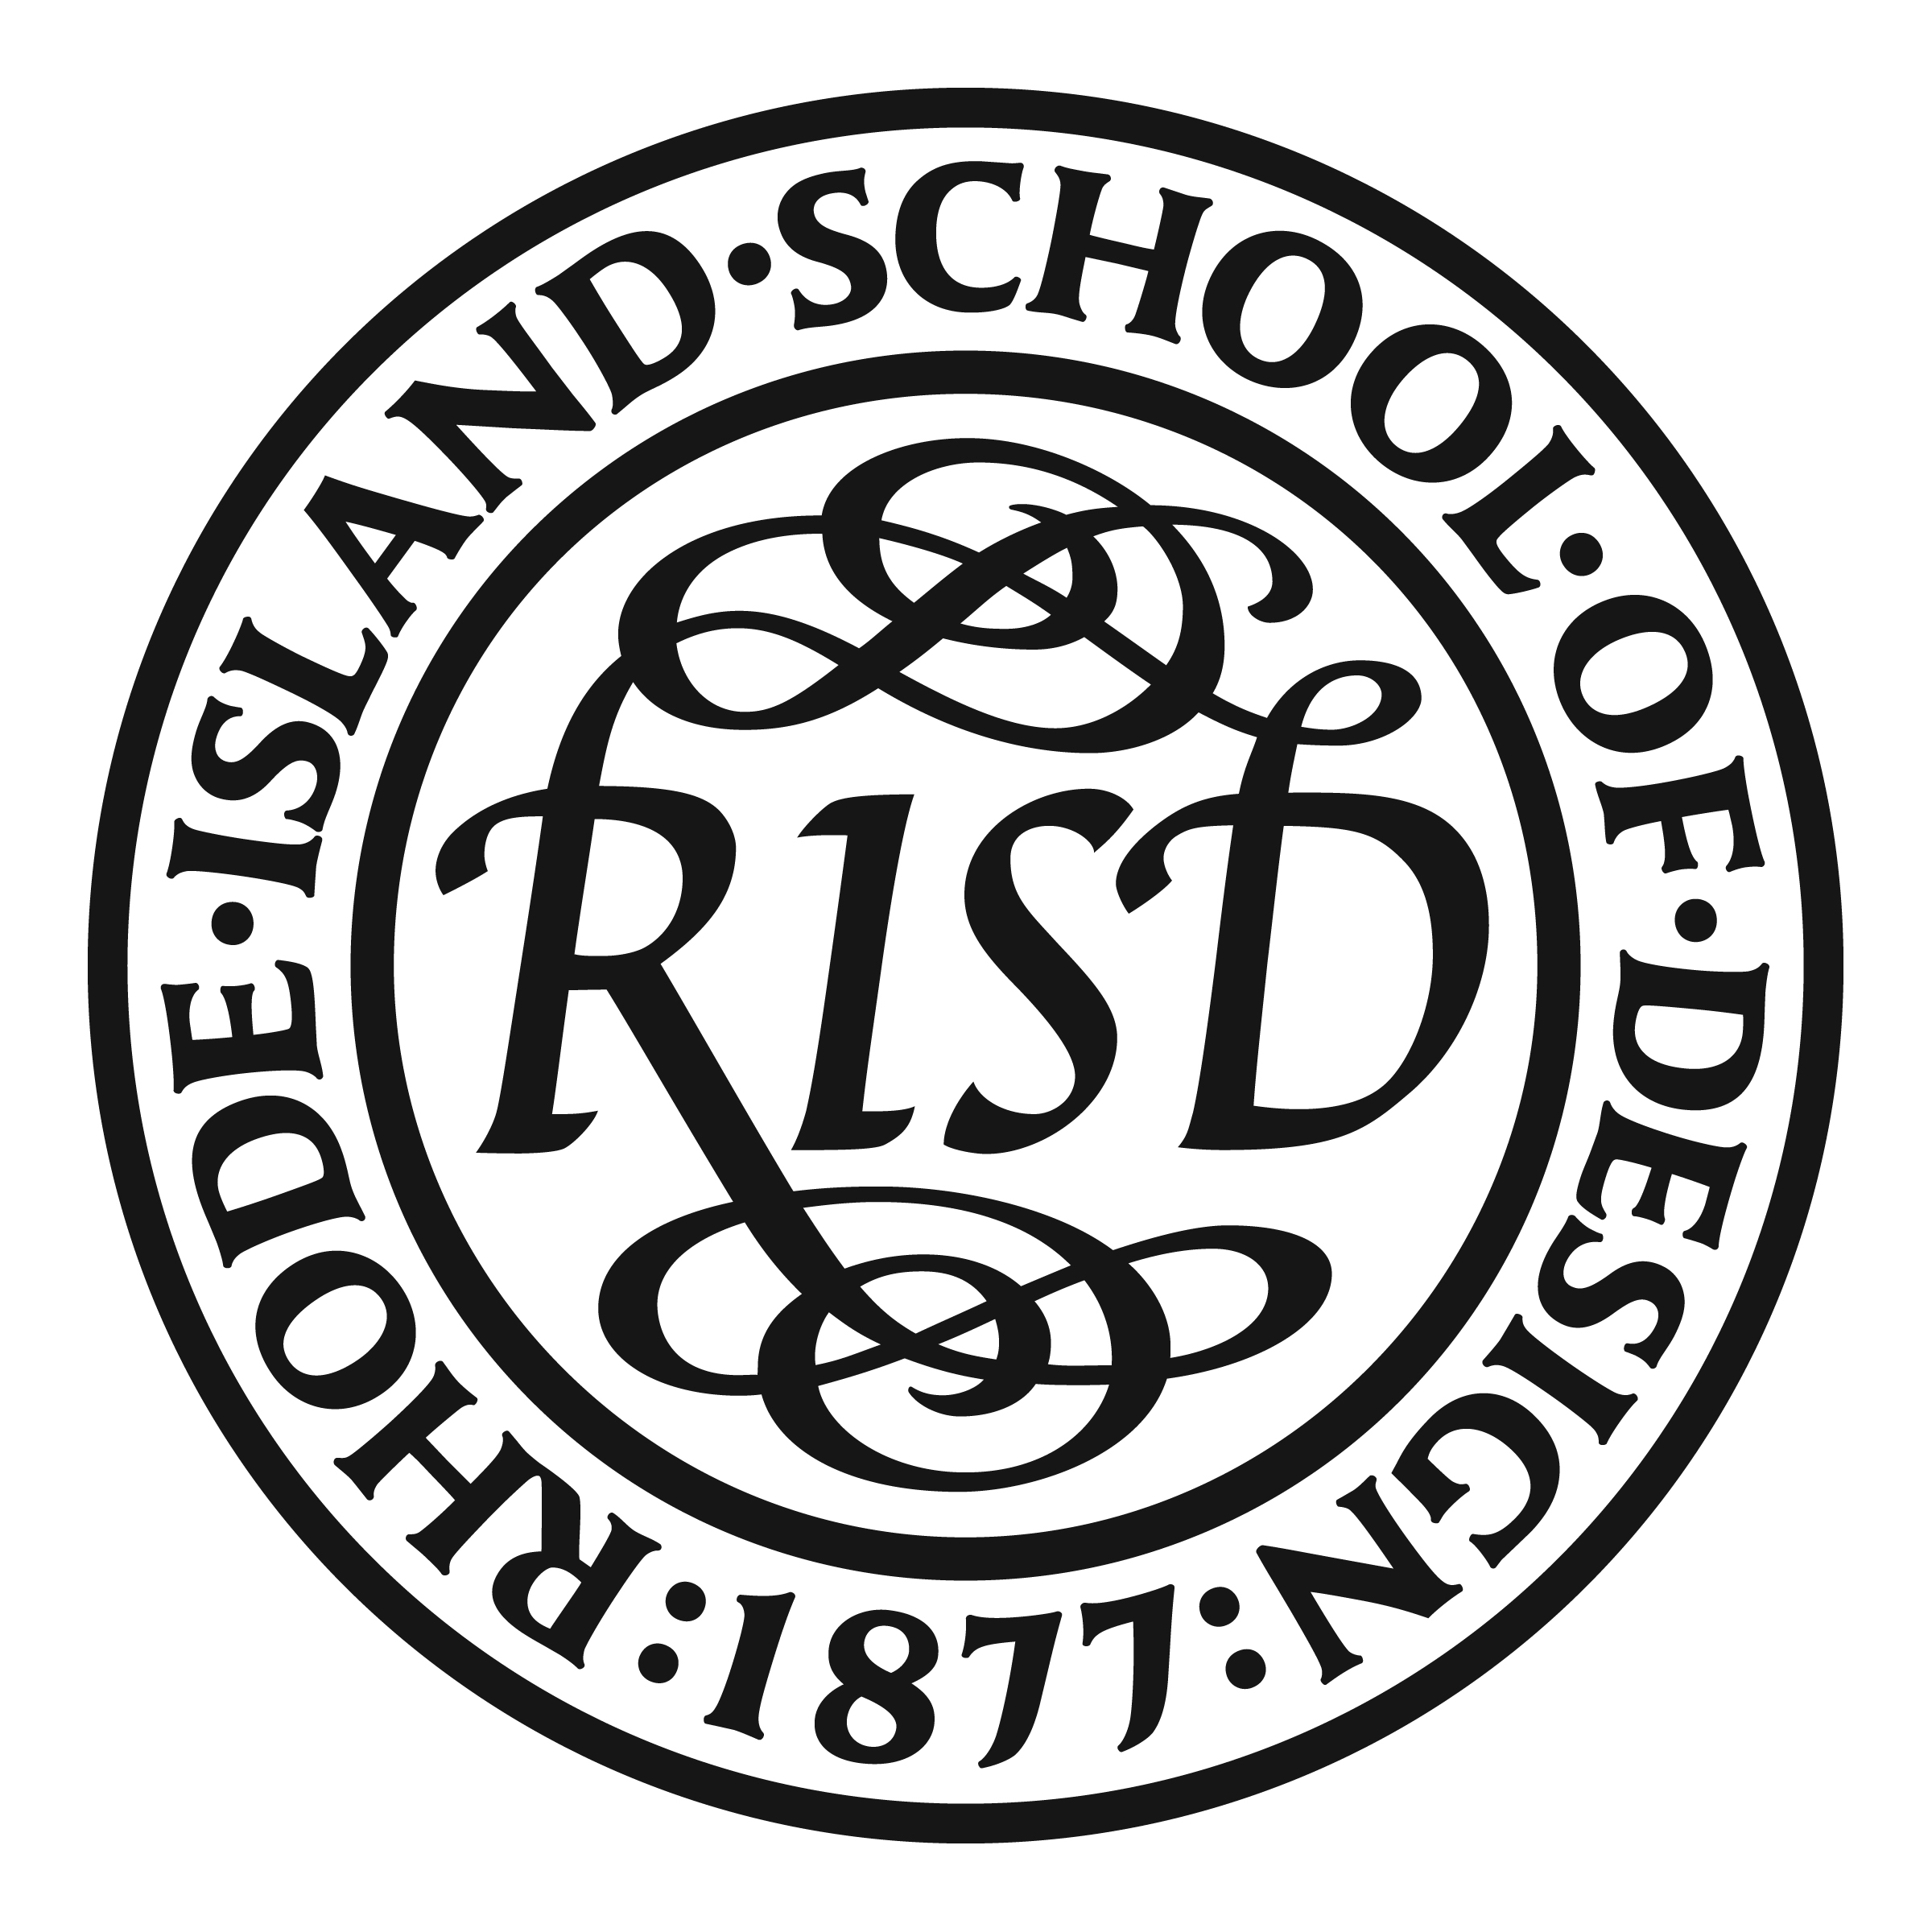 RISD logo.jpg